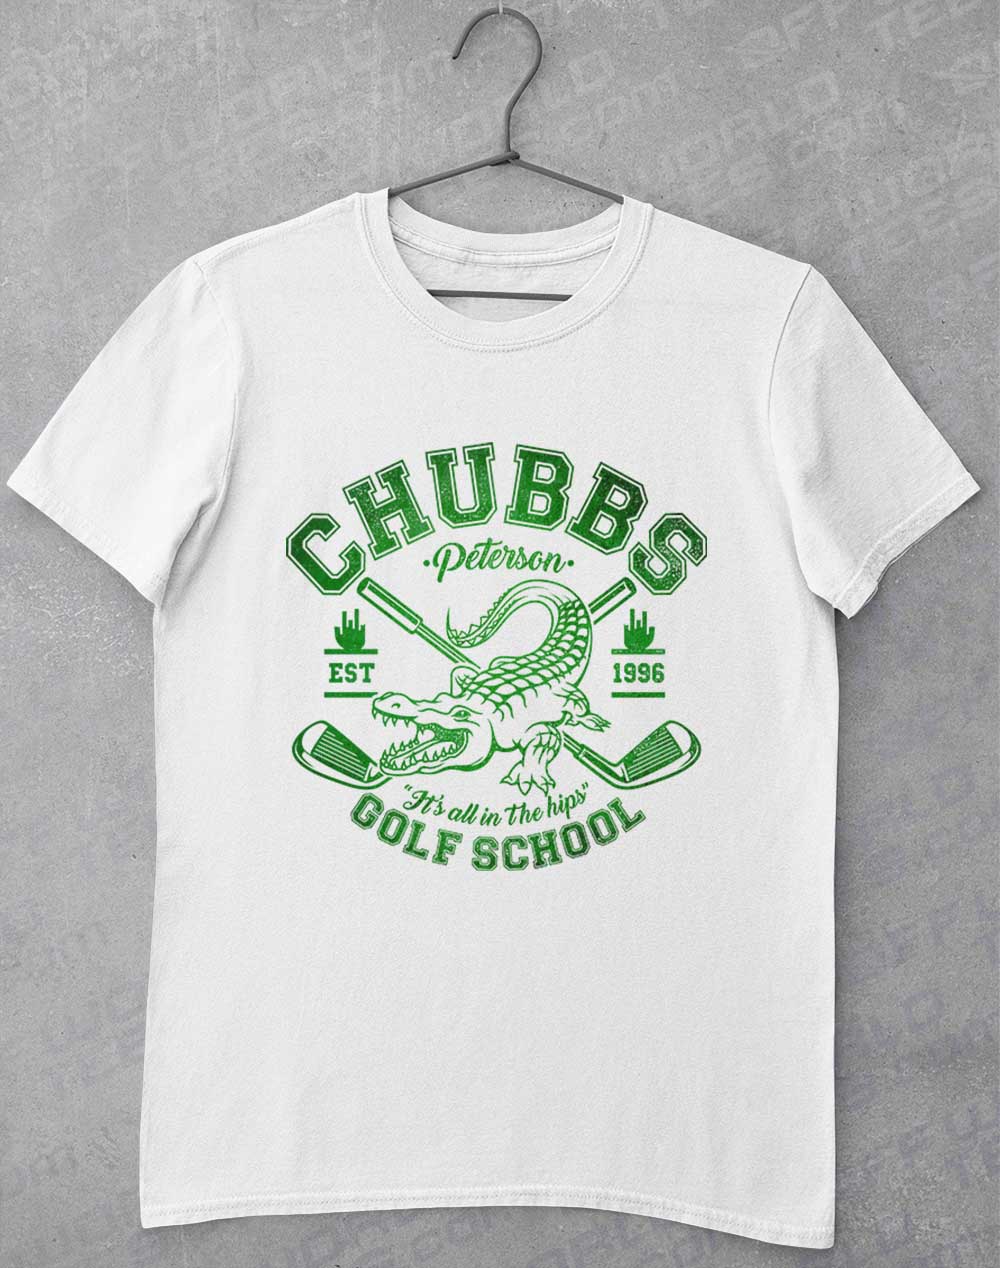 White - Chubb's Golf School 1996 T-Shirt